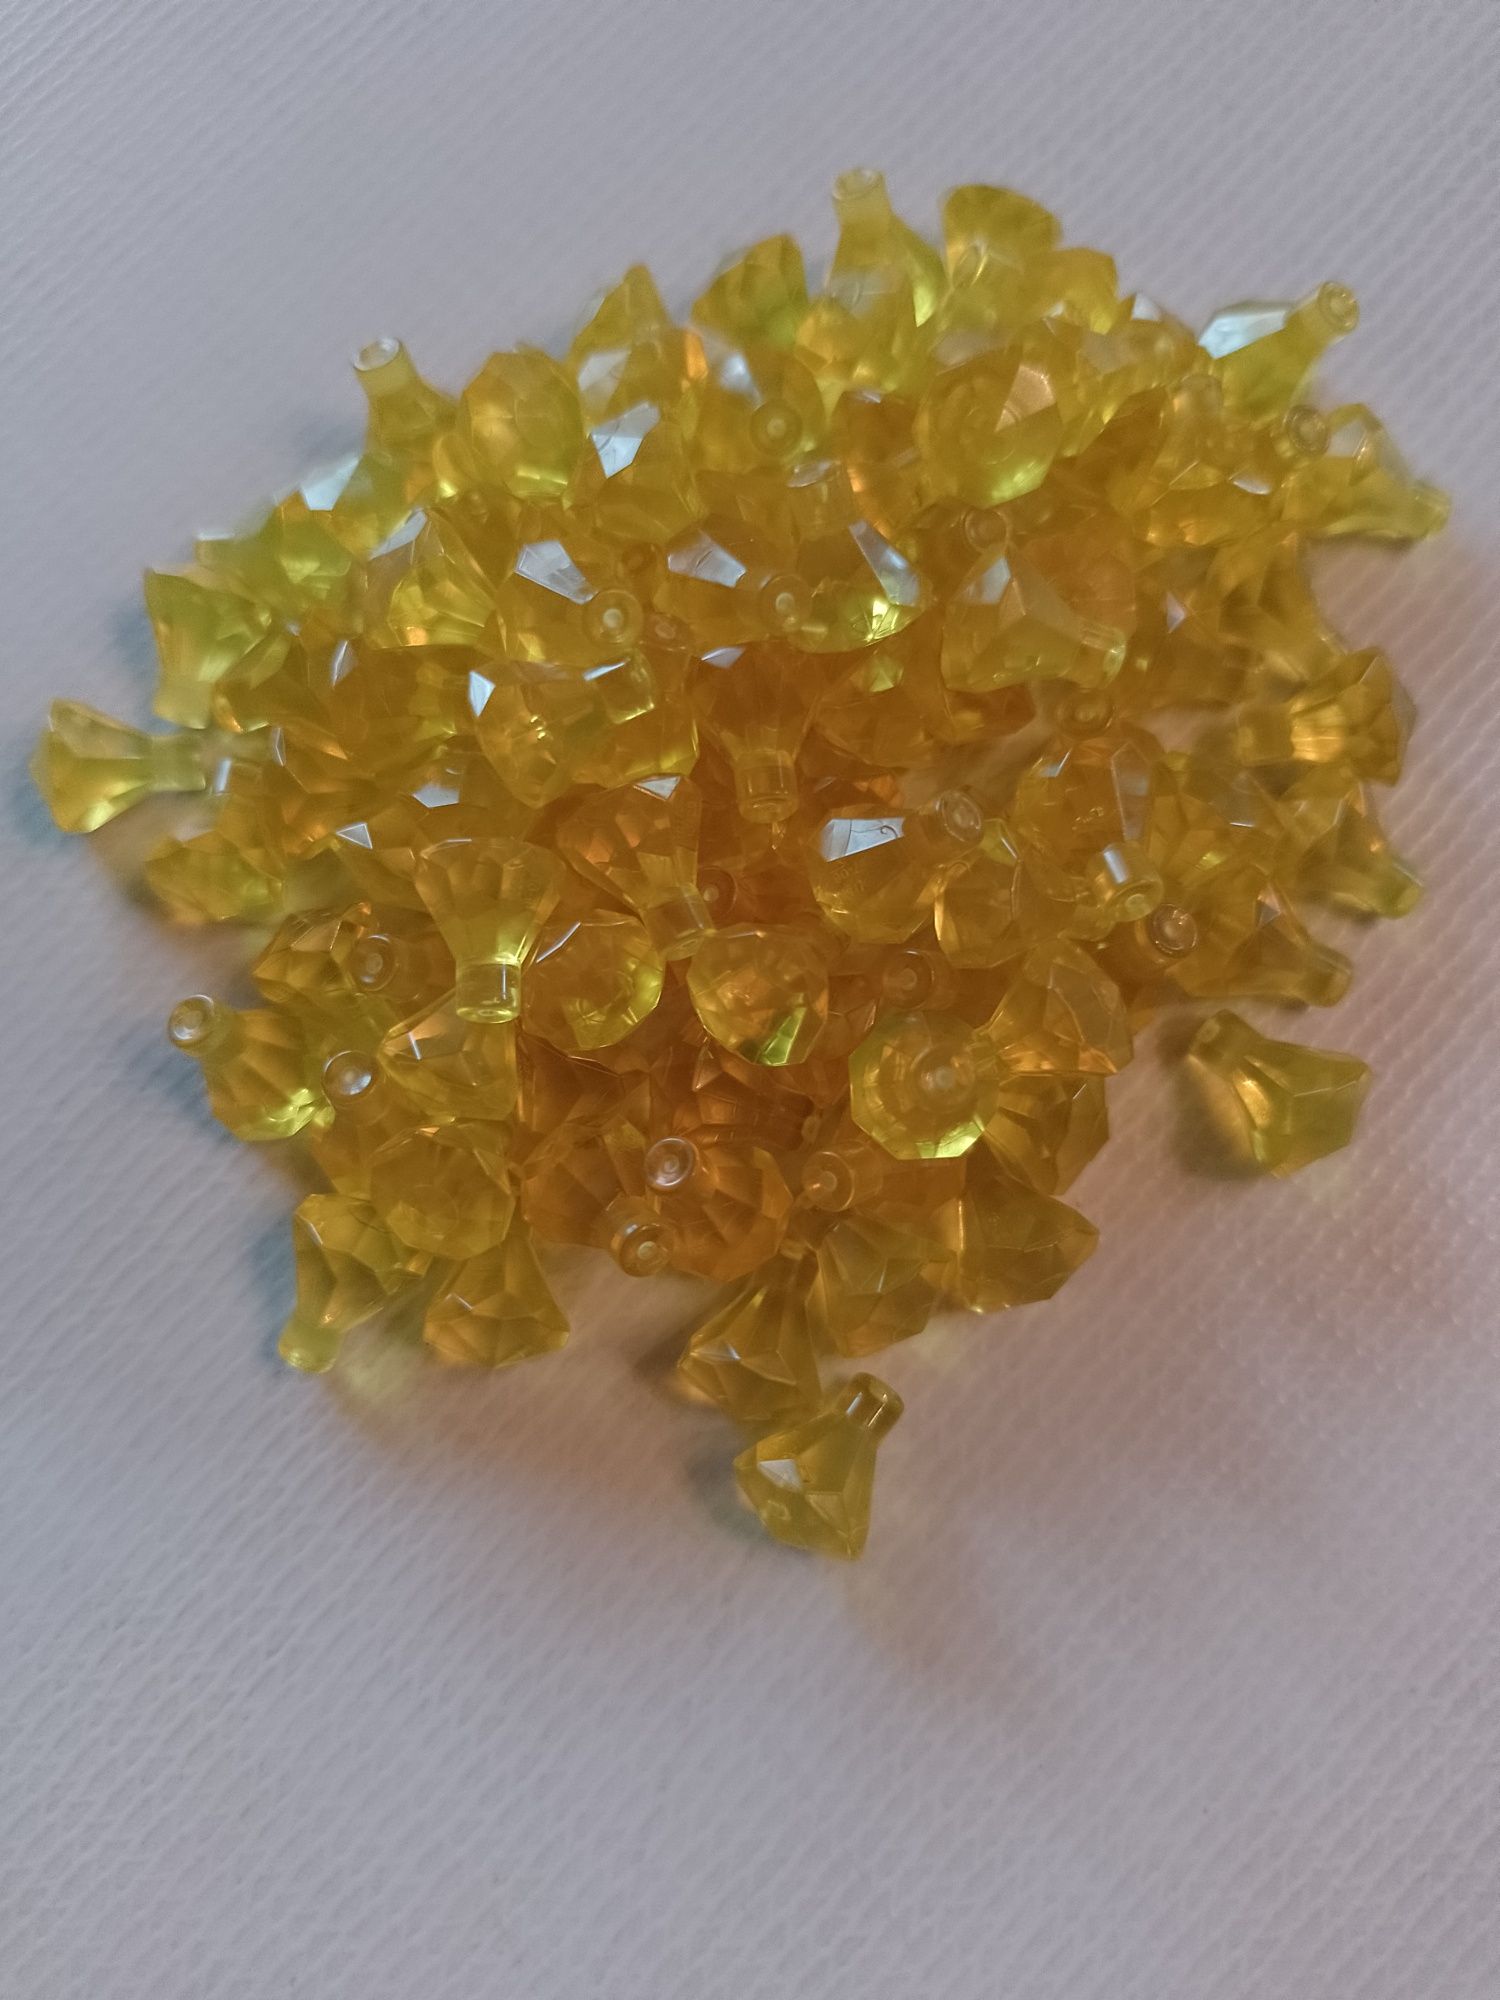 Lego diament kryształ żółty